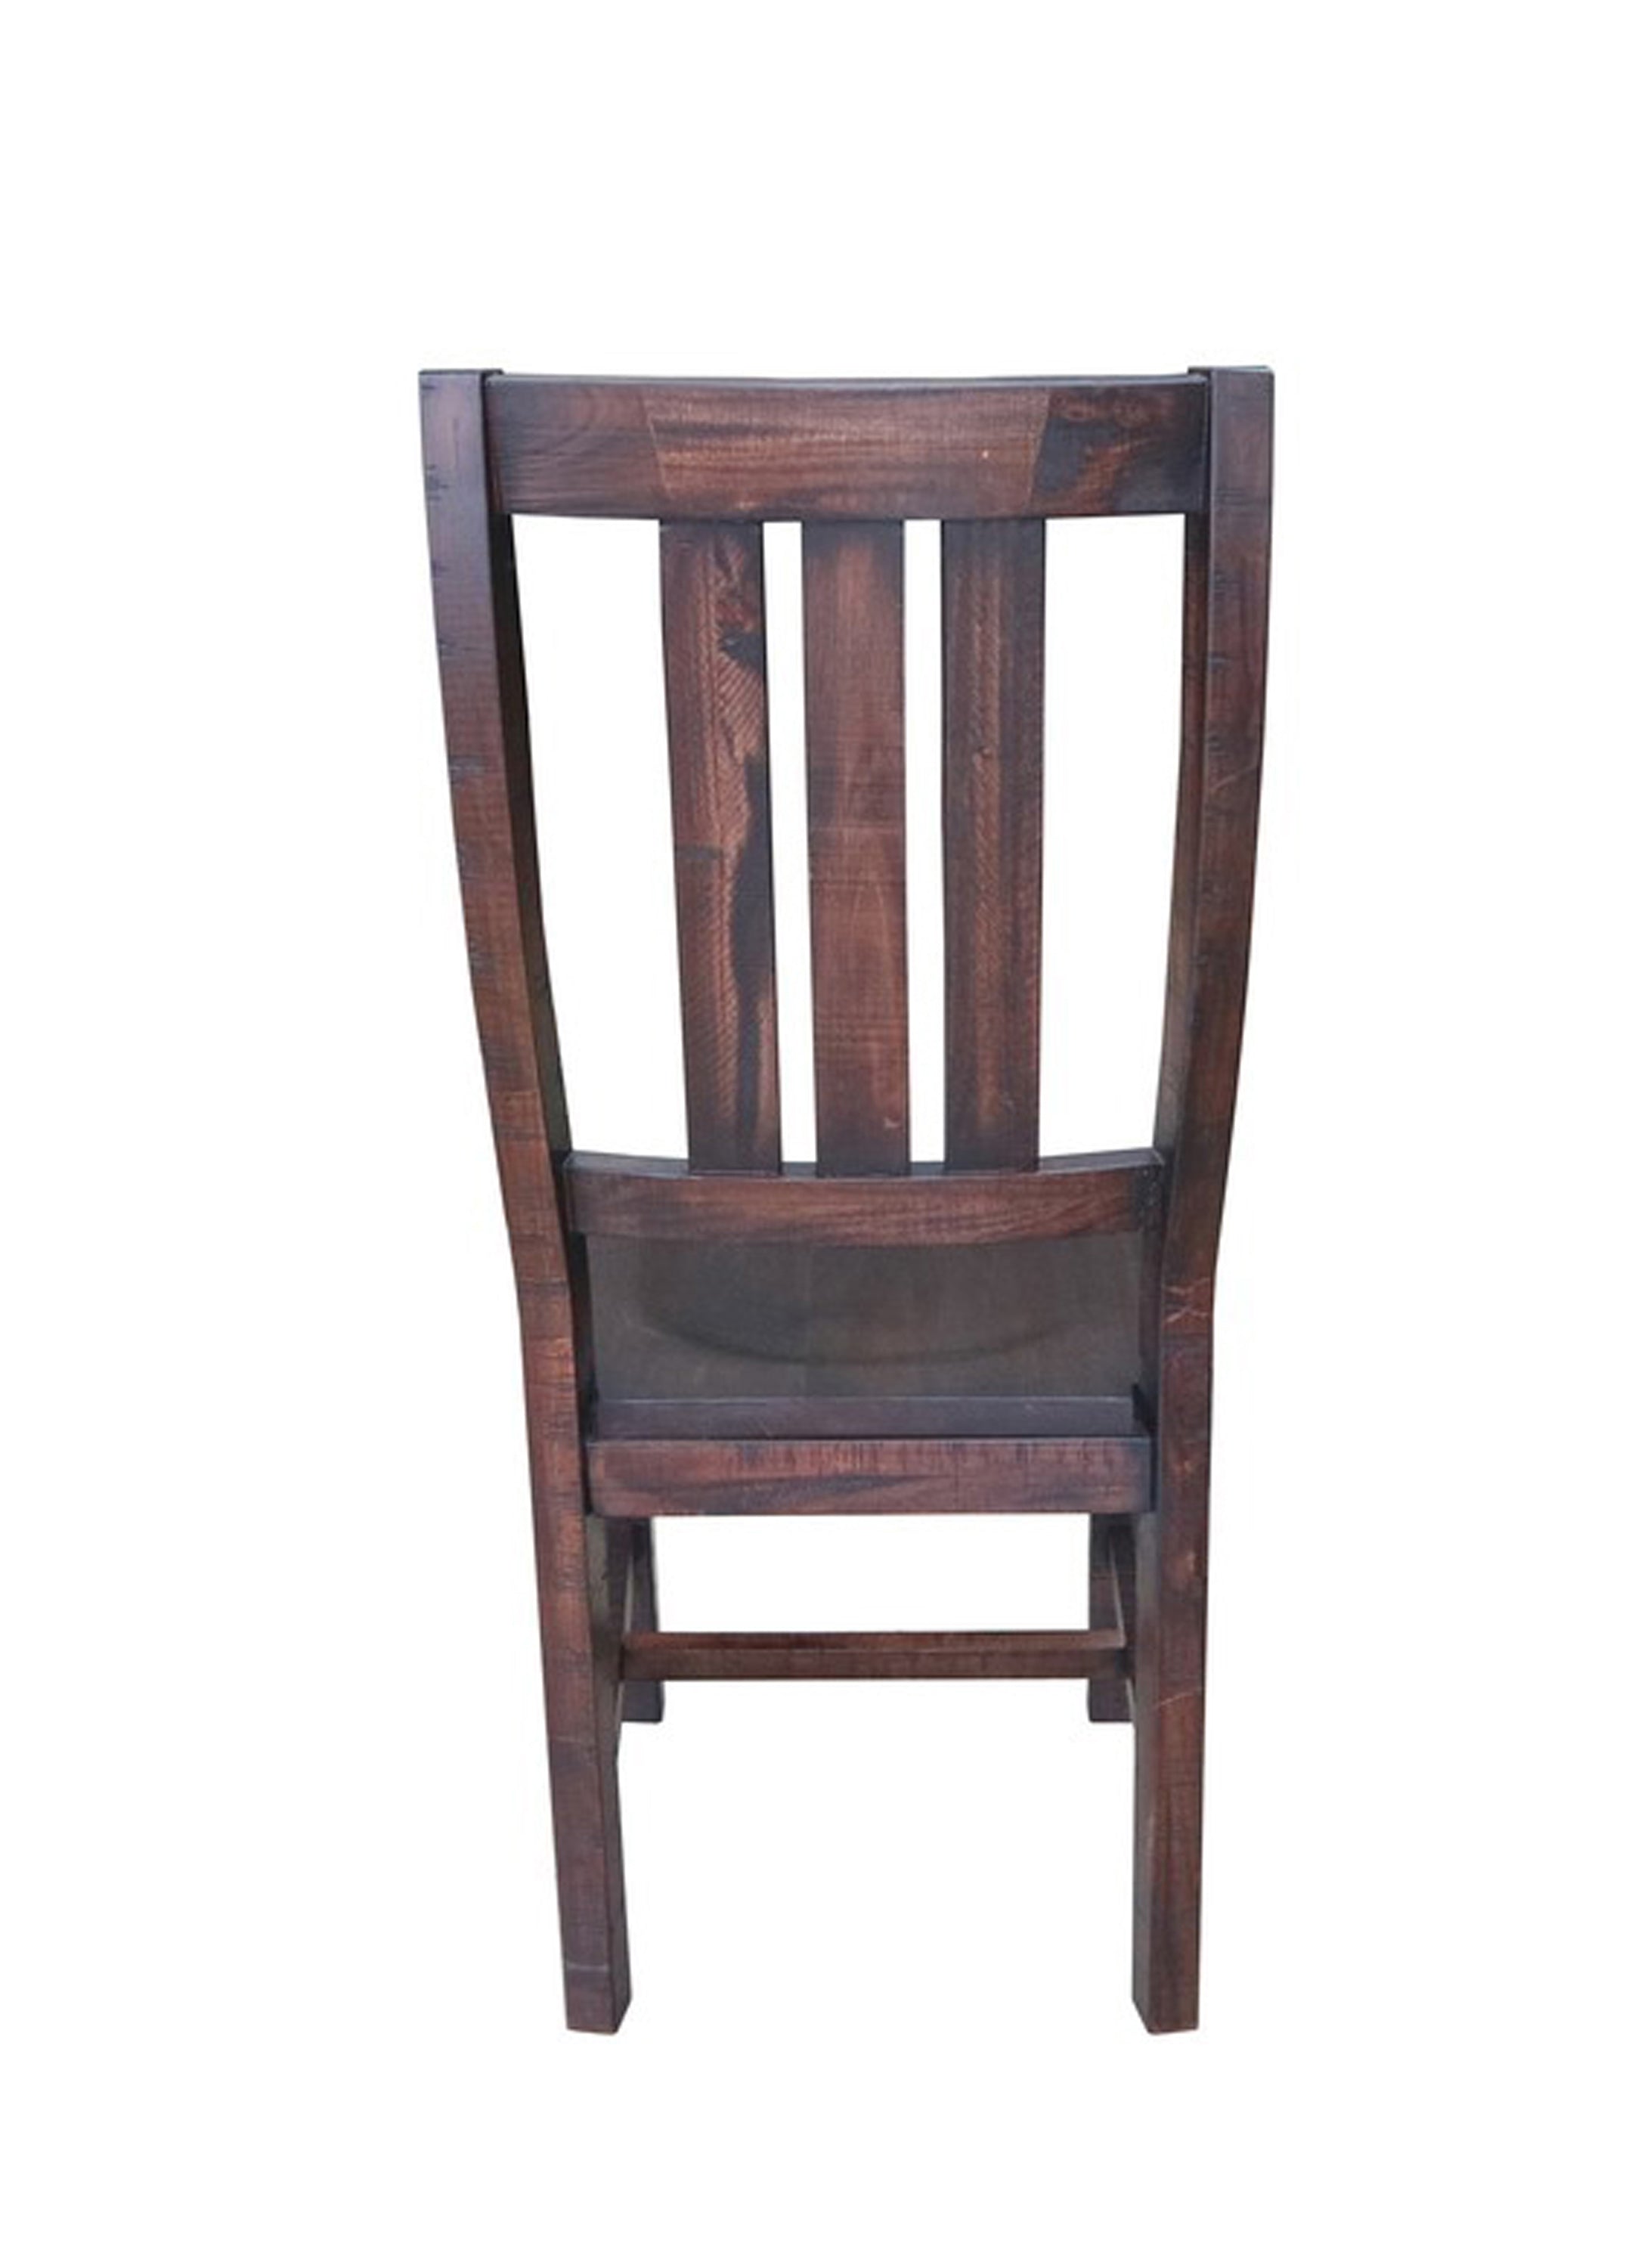 Calandra Collection Slat Back Side Chair